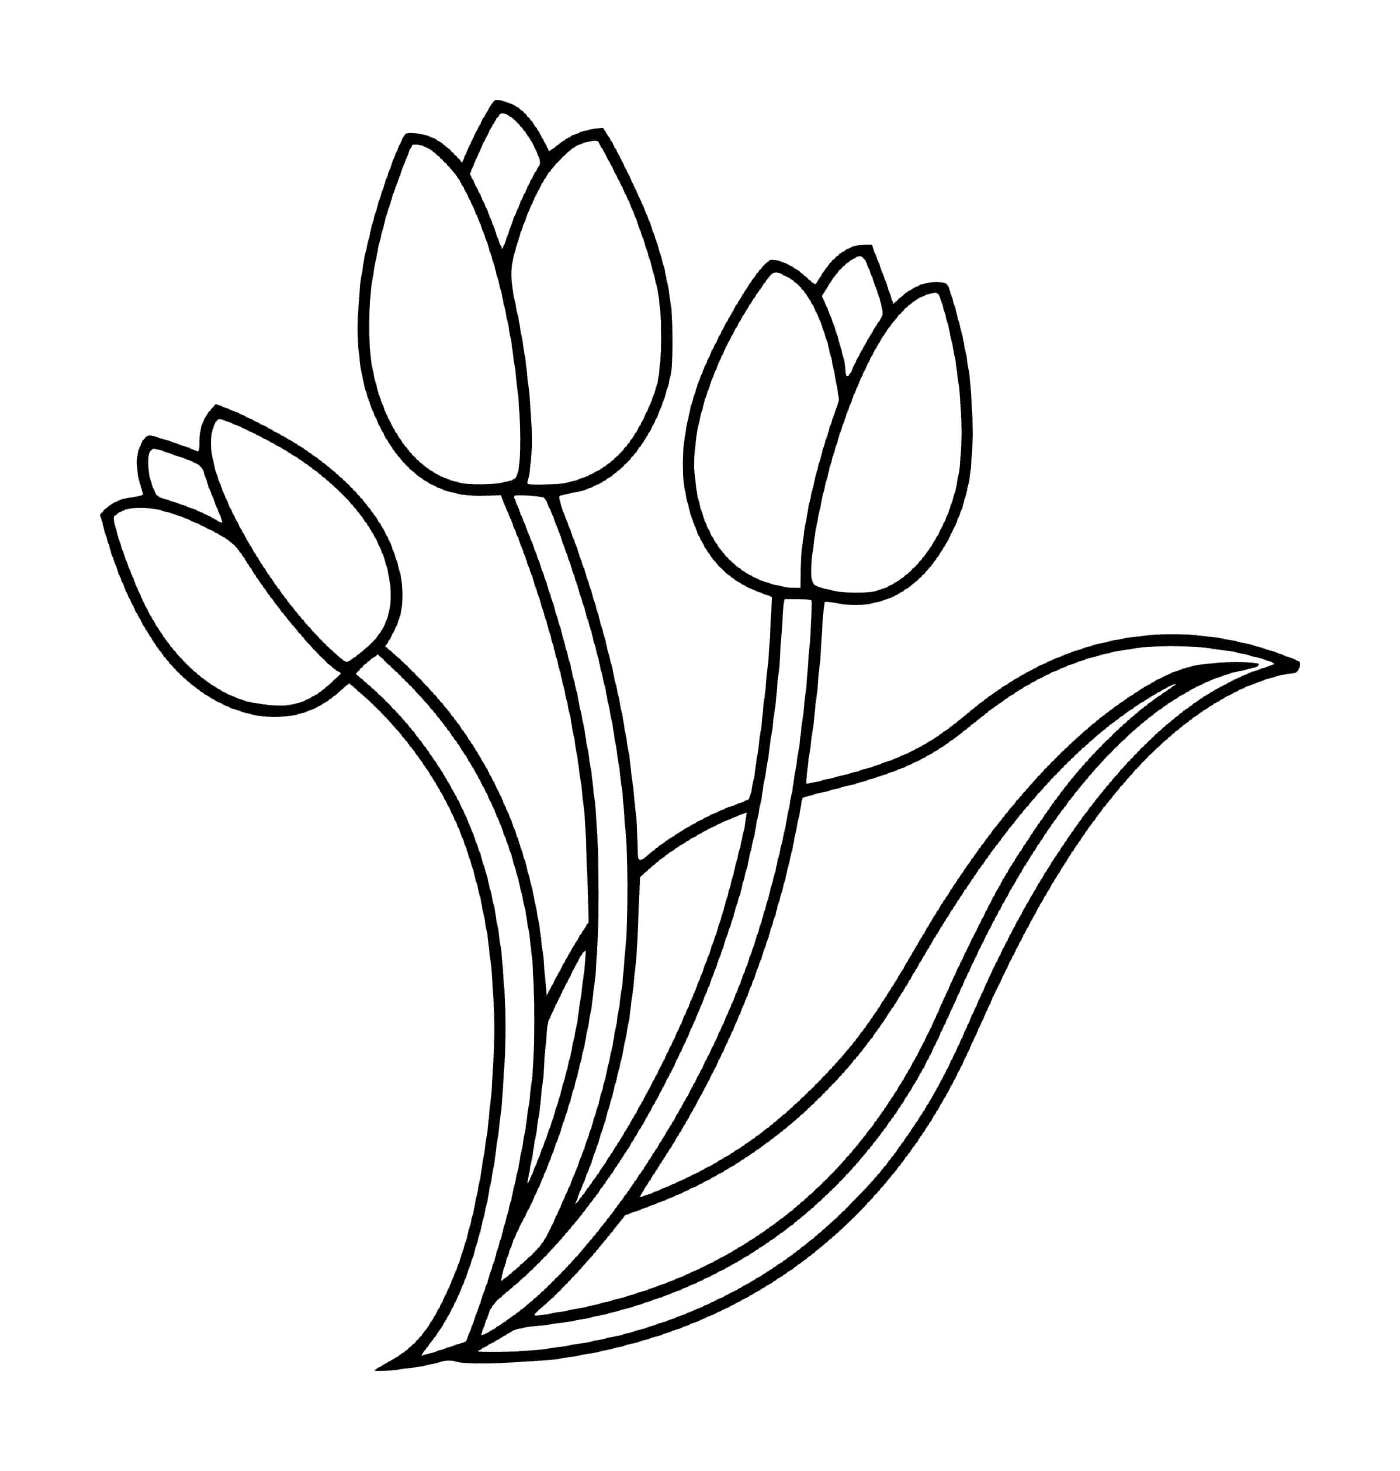  Fiori di tulipani 